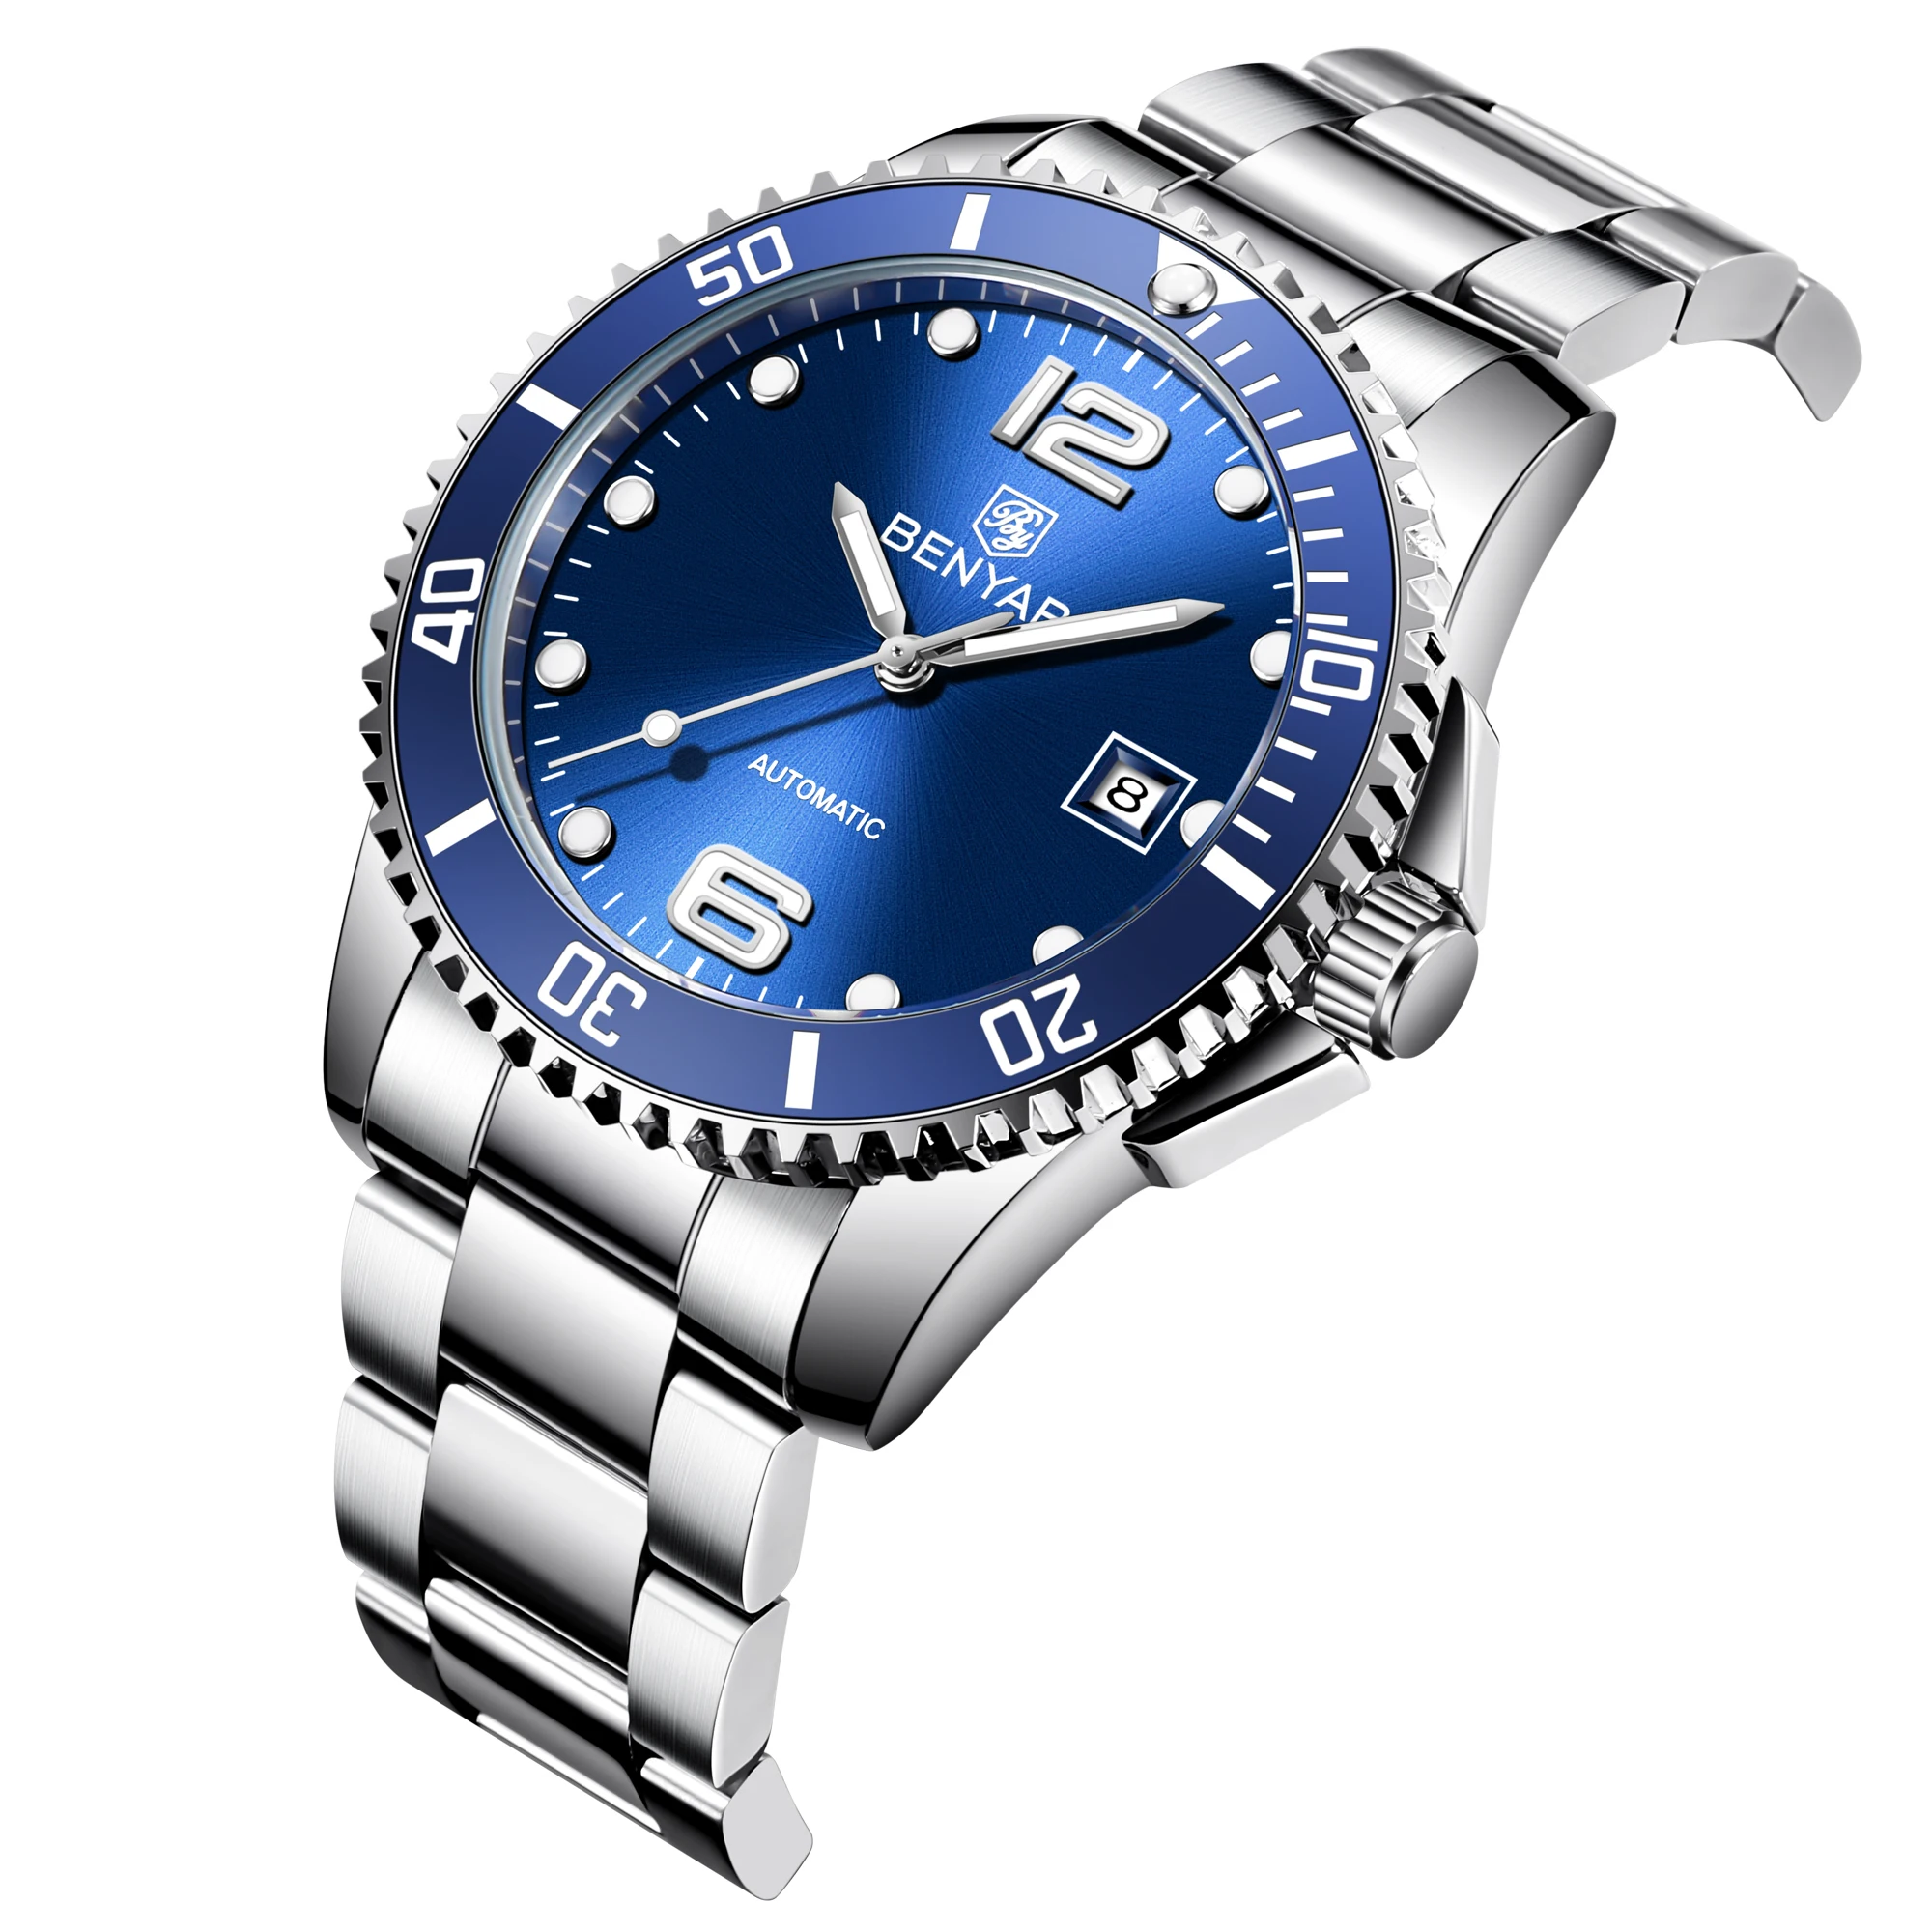 
Original BENYAR Mechanical Watches 5152 Luxury Men Wrist Automatic Watch Reloj Hombre Montre Homme 